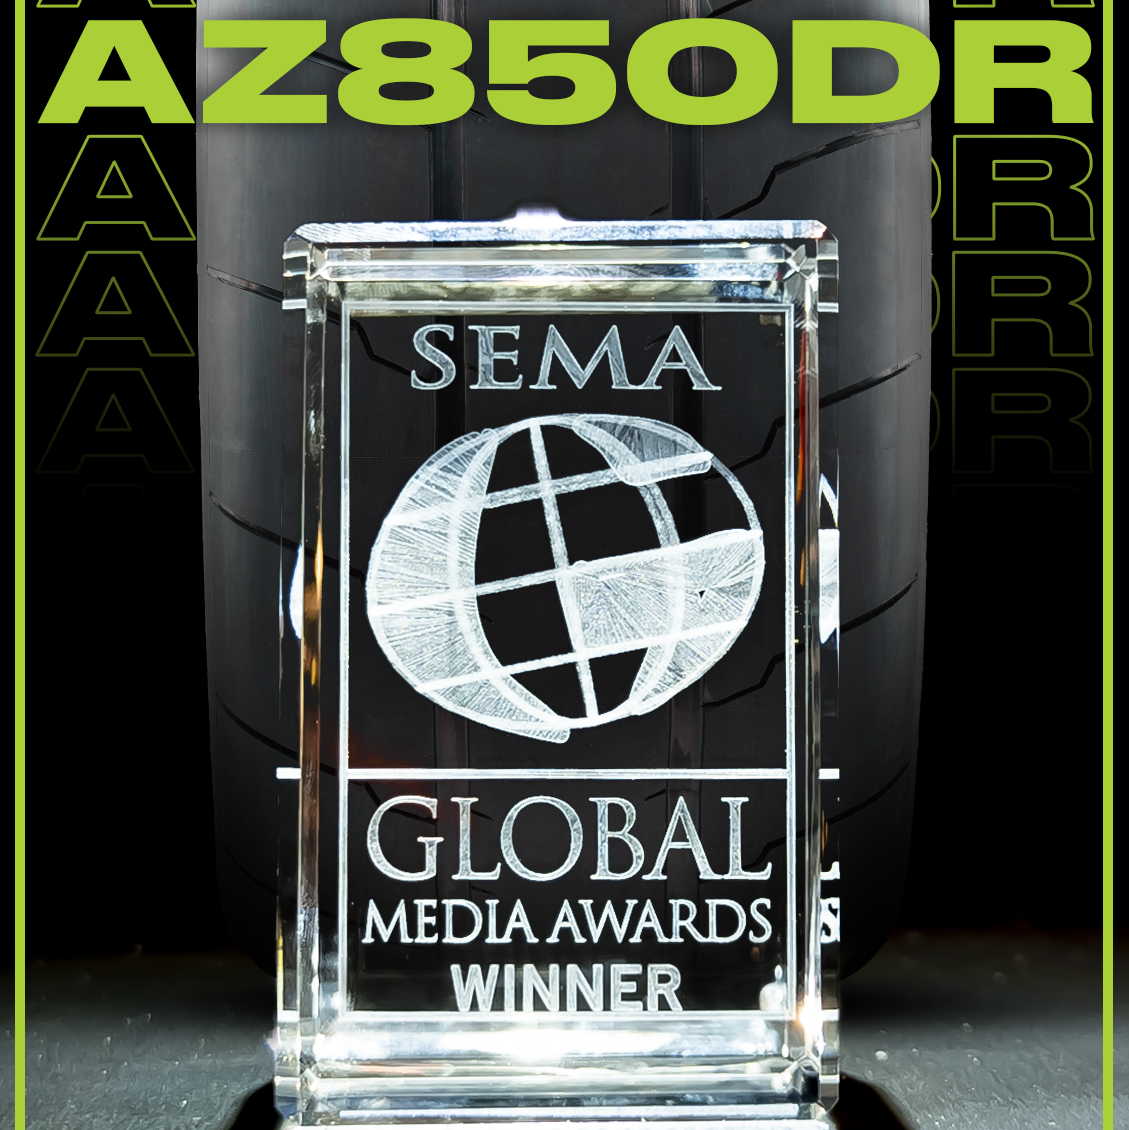 ATTURO TIRE WINS GLOBAL MEDIA AWARD FOR AZ850DR DRAG RADIAL TIRE AT SEMA SHOW 2022